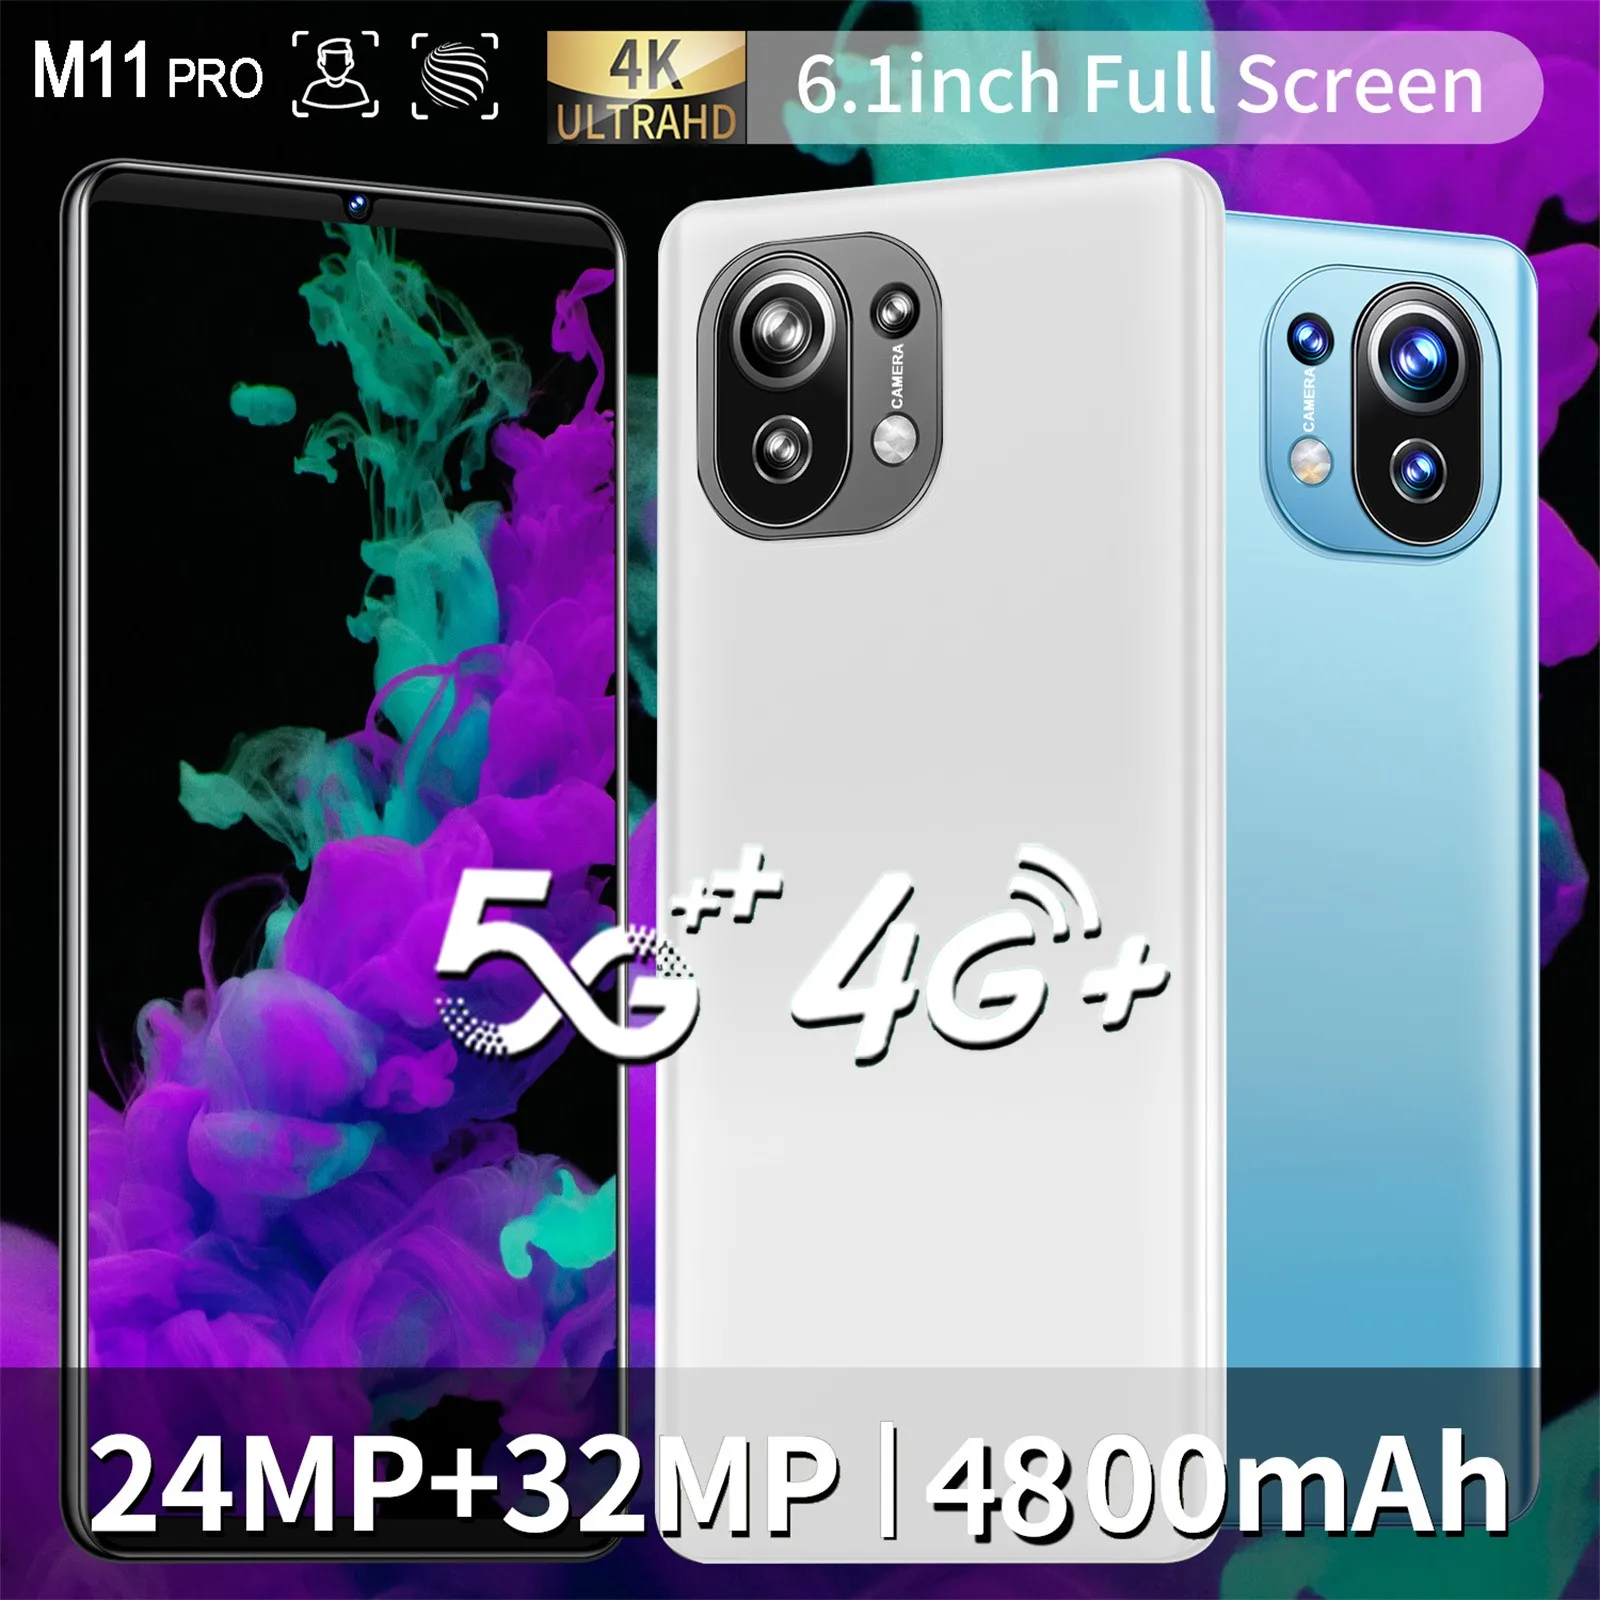 2021 New M11 Pro Max Android Phone 6.1 Inch Full Screen 5G Smart Phone RAM16+ROM512GB Smartphone 4800mAh Mobilephone - ANKUX Tech Co., Ltd